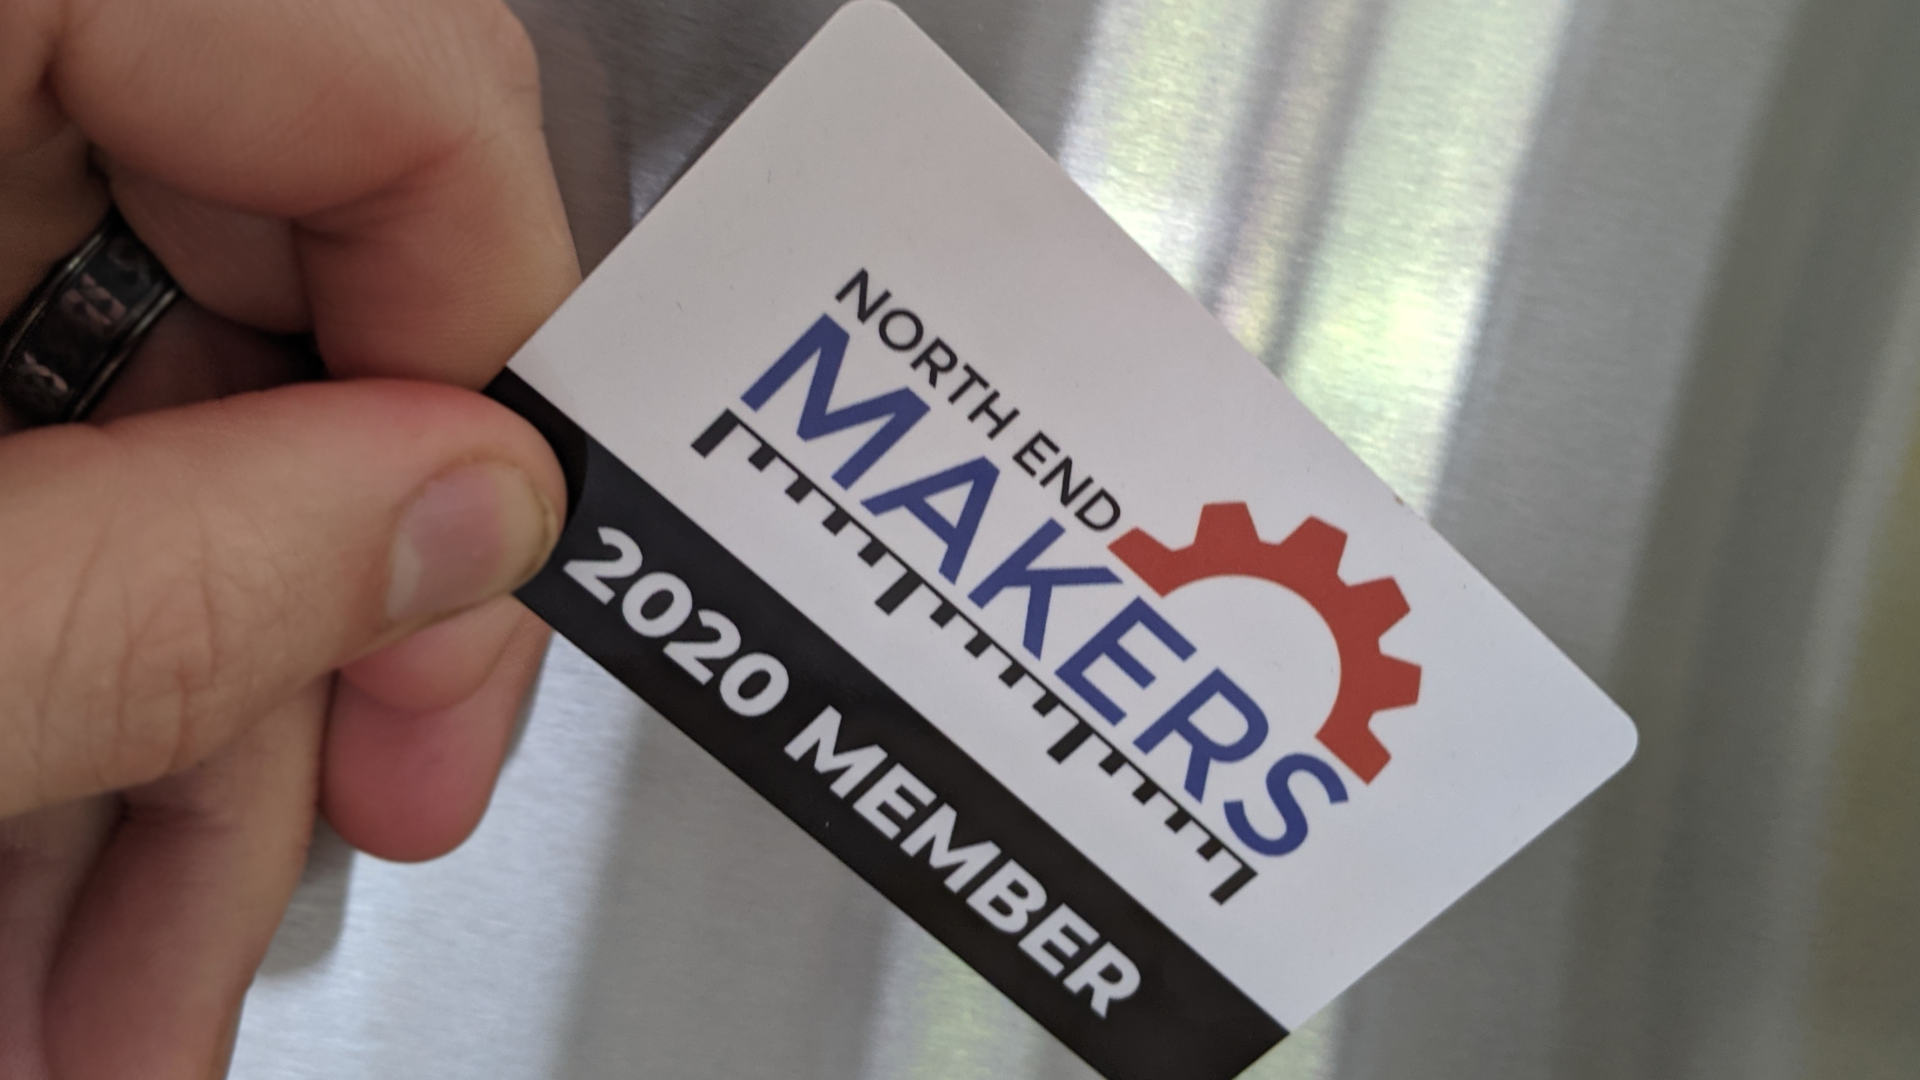 An image of a membership card